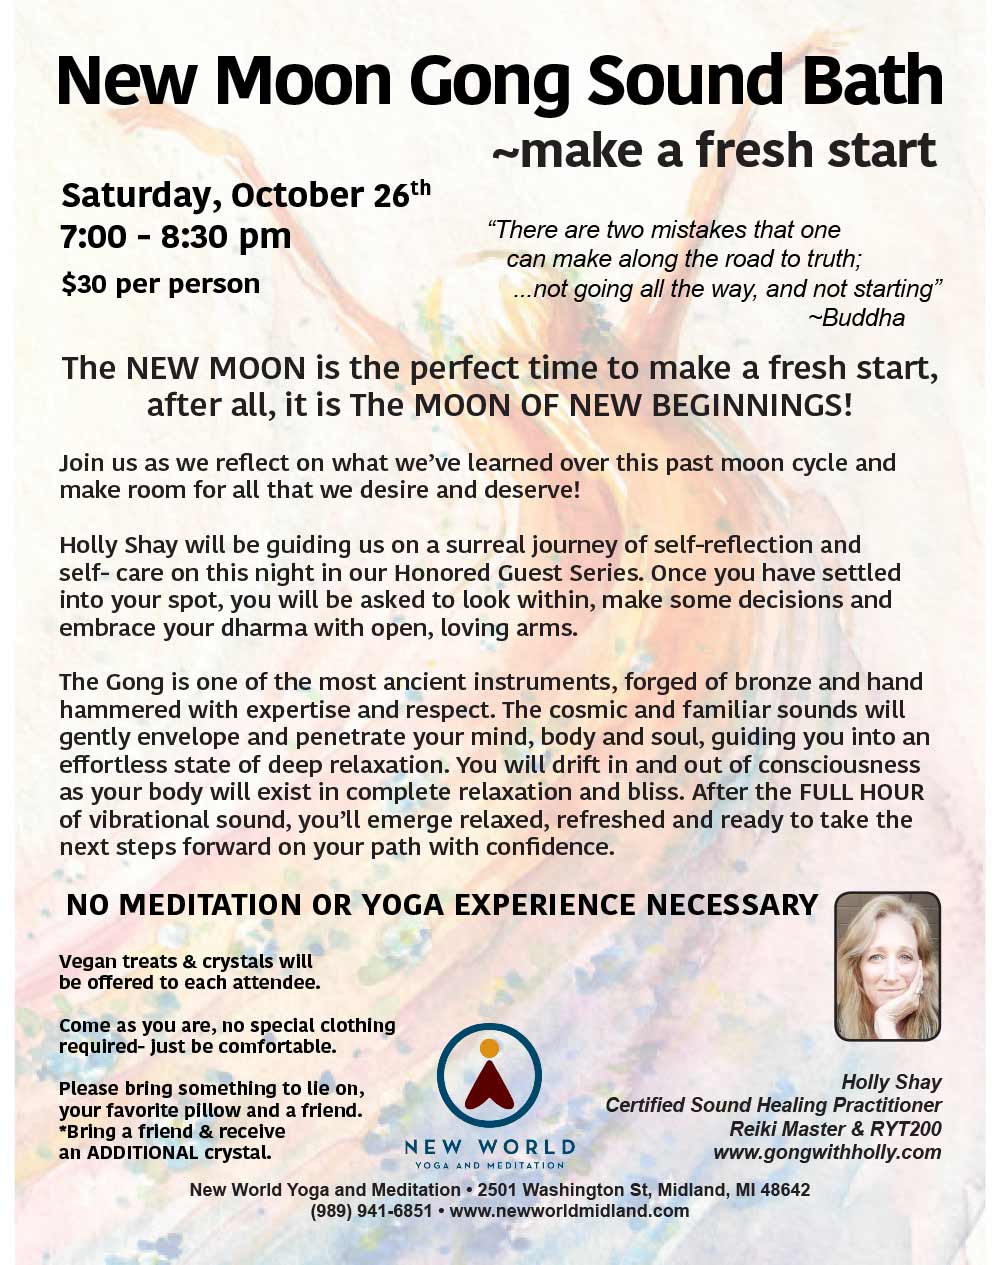 New Moon Gong Sound Bath. New World Yoga and Meditation, Midland, MI